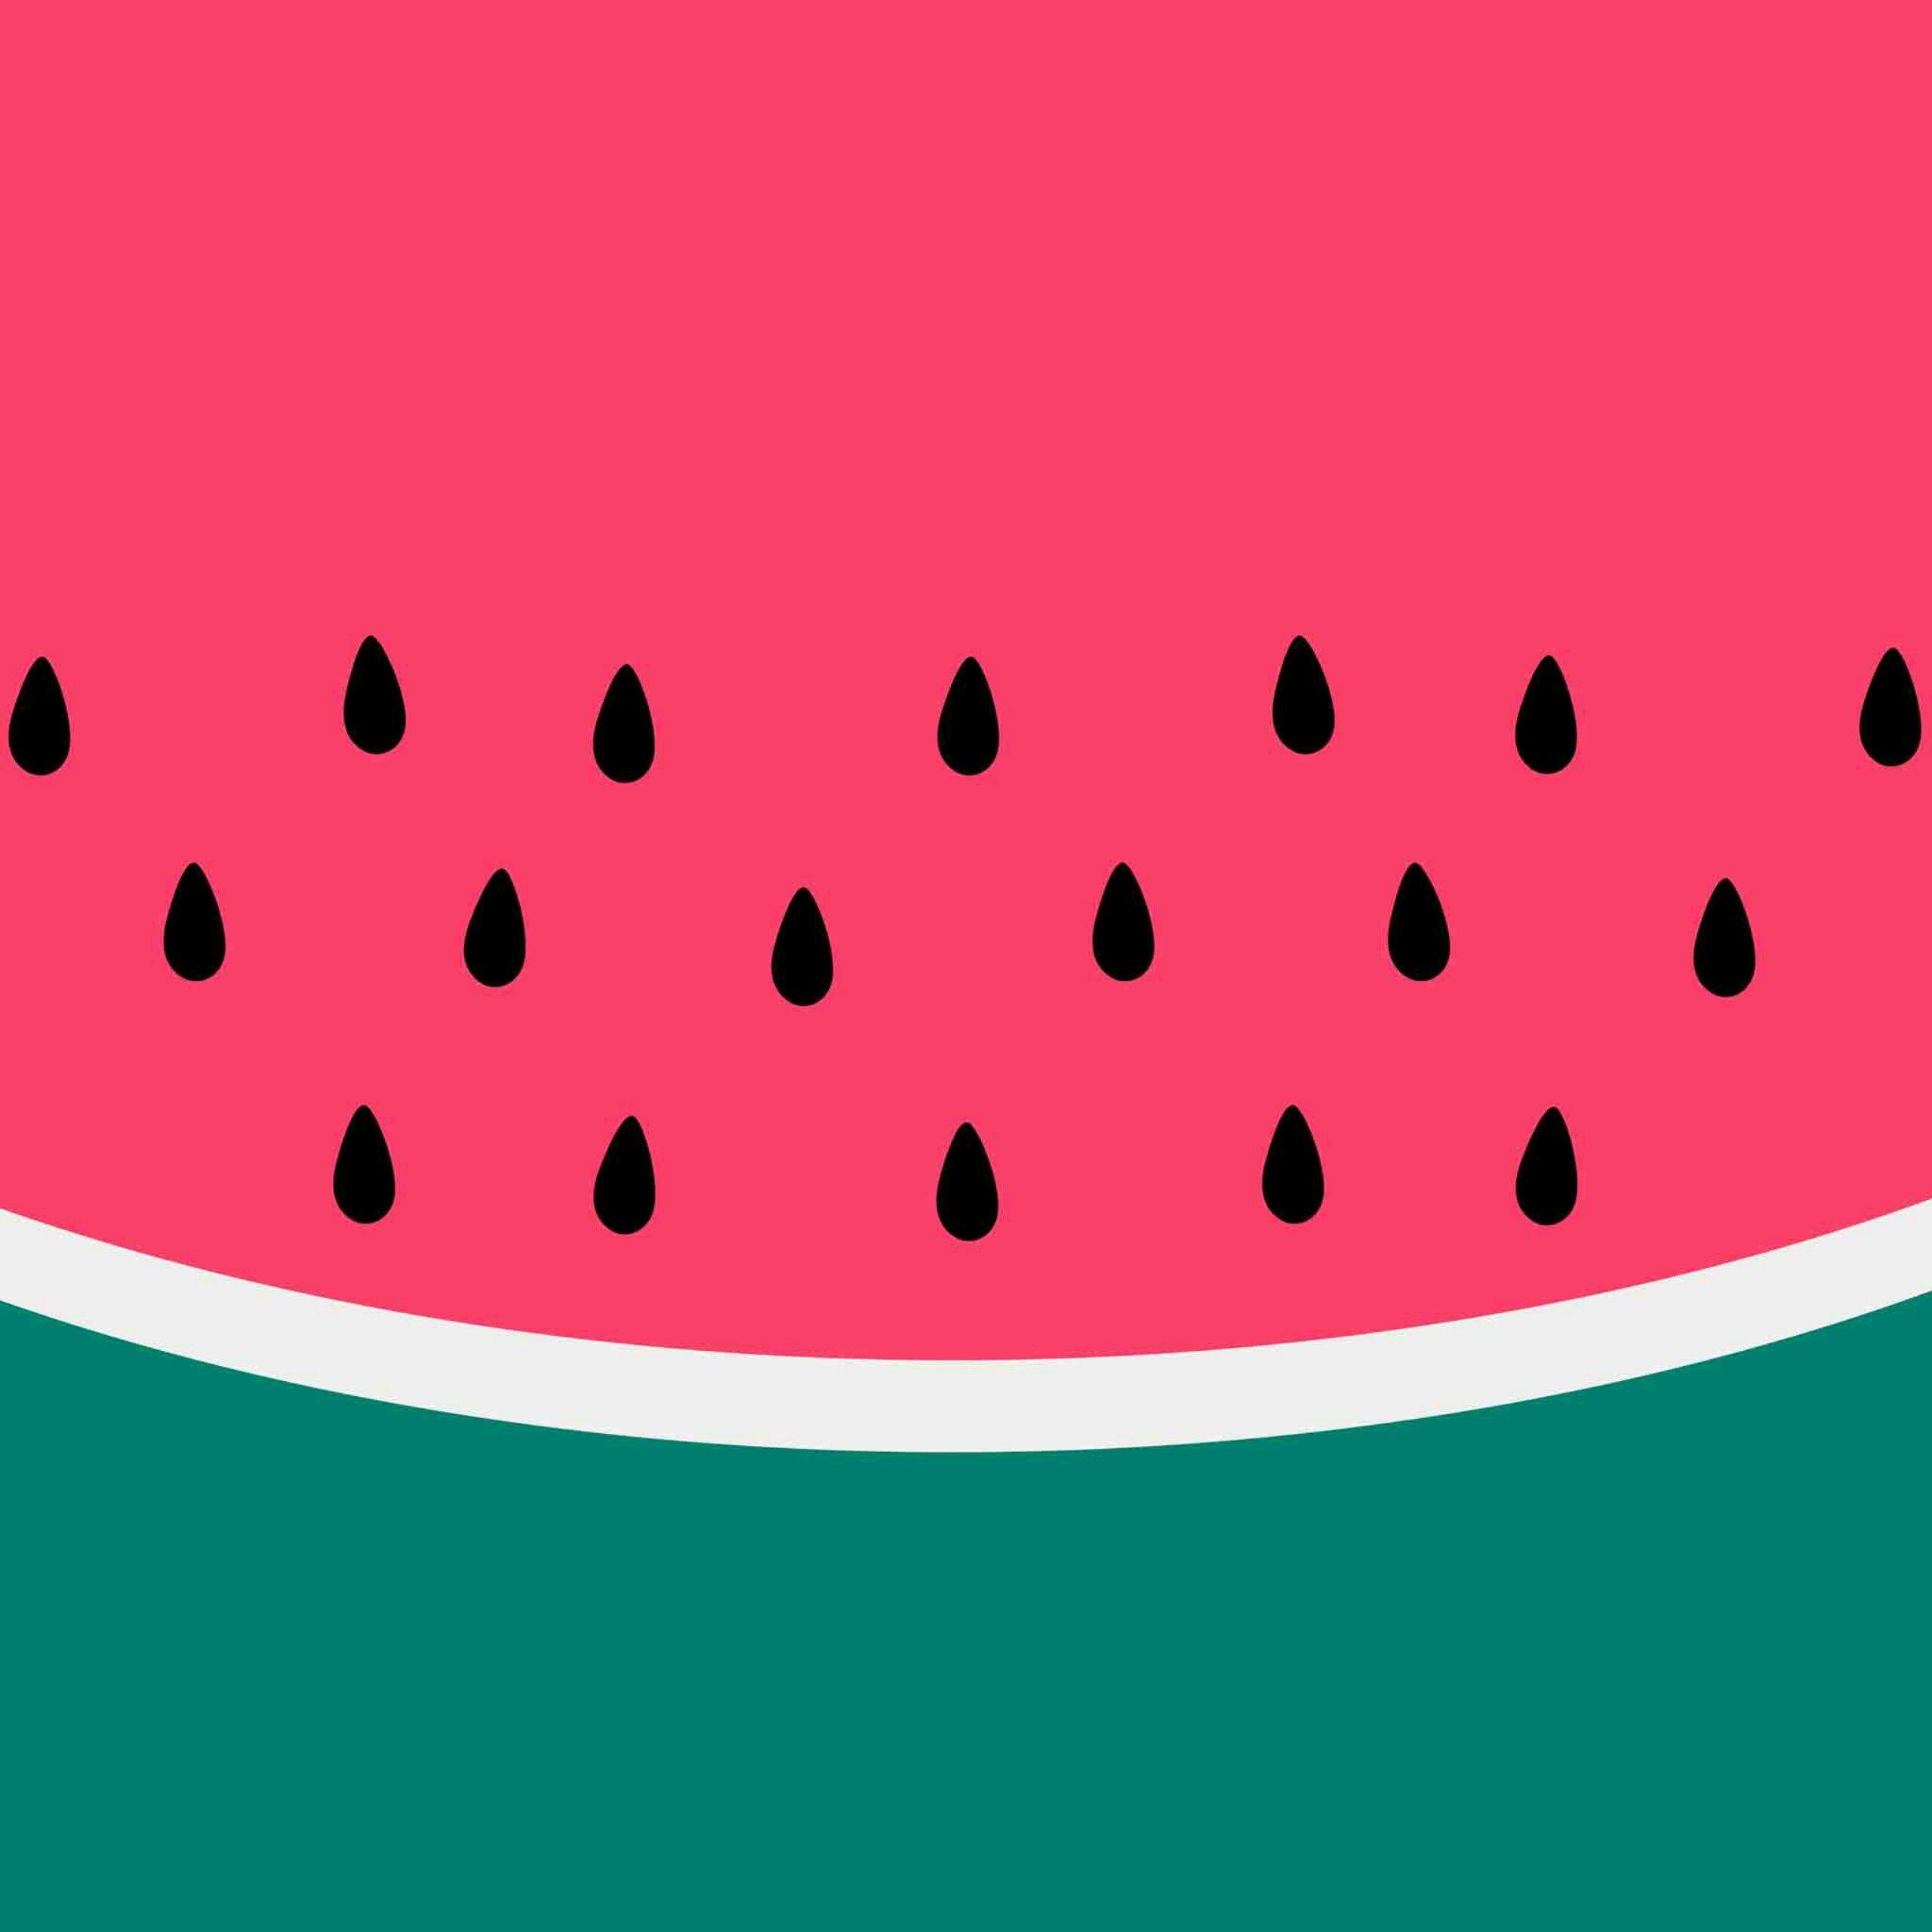 Watermelon Vector QHD Wallpaper